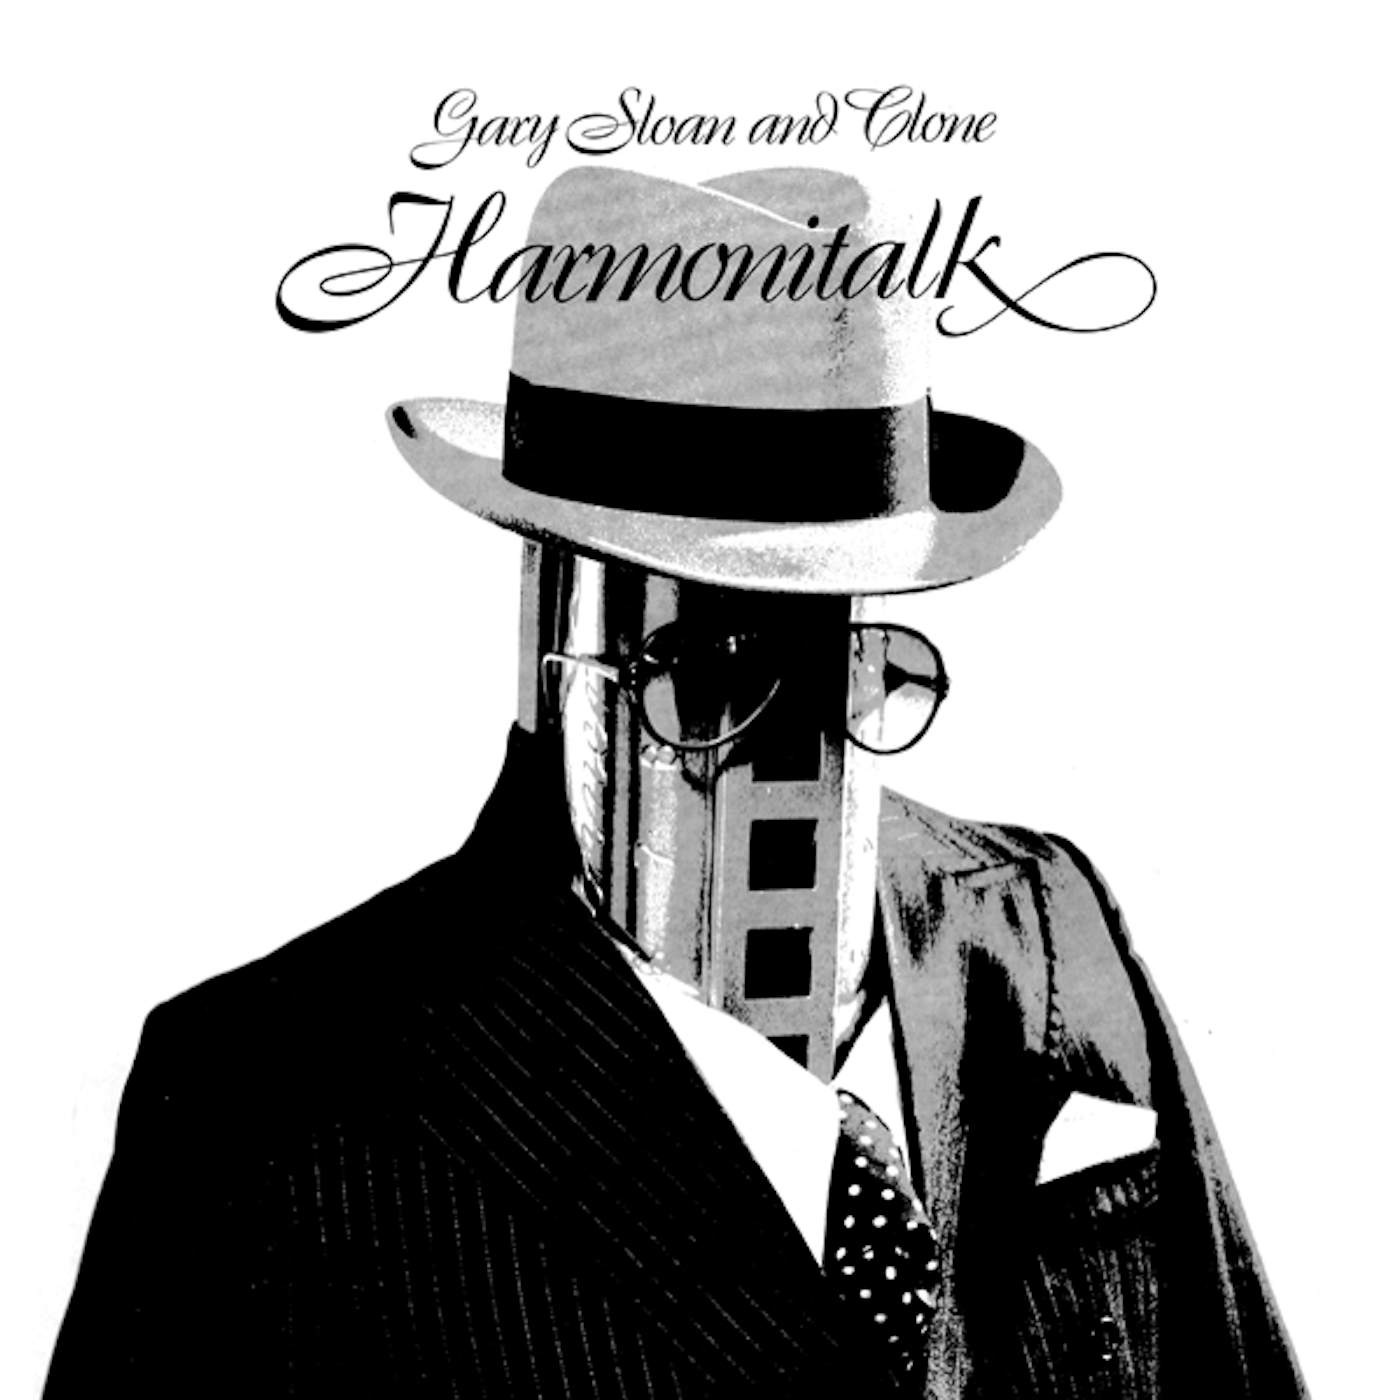 Gary Sloan and Clone HARMONITALK CD